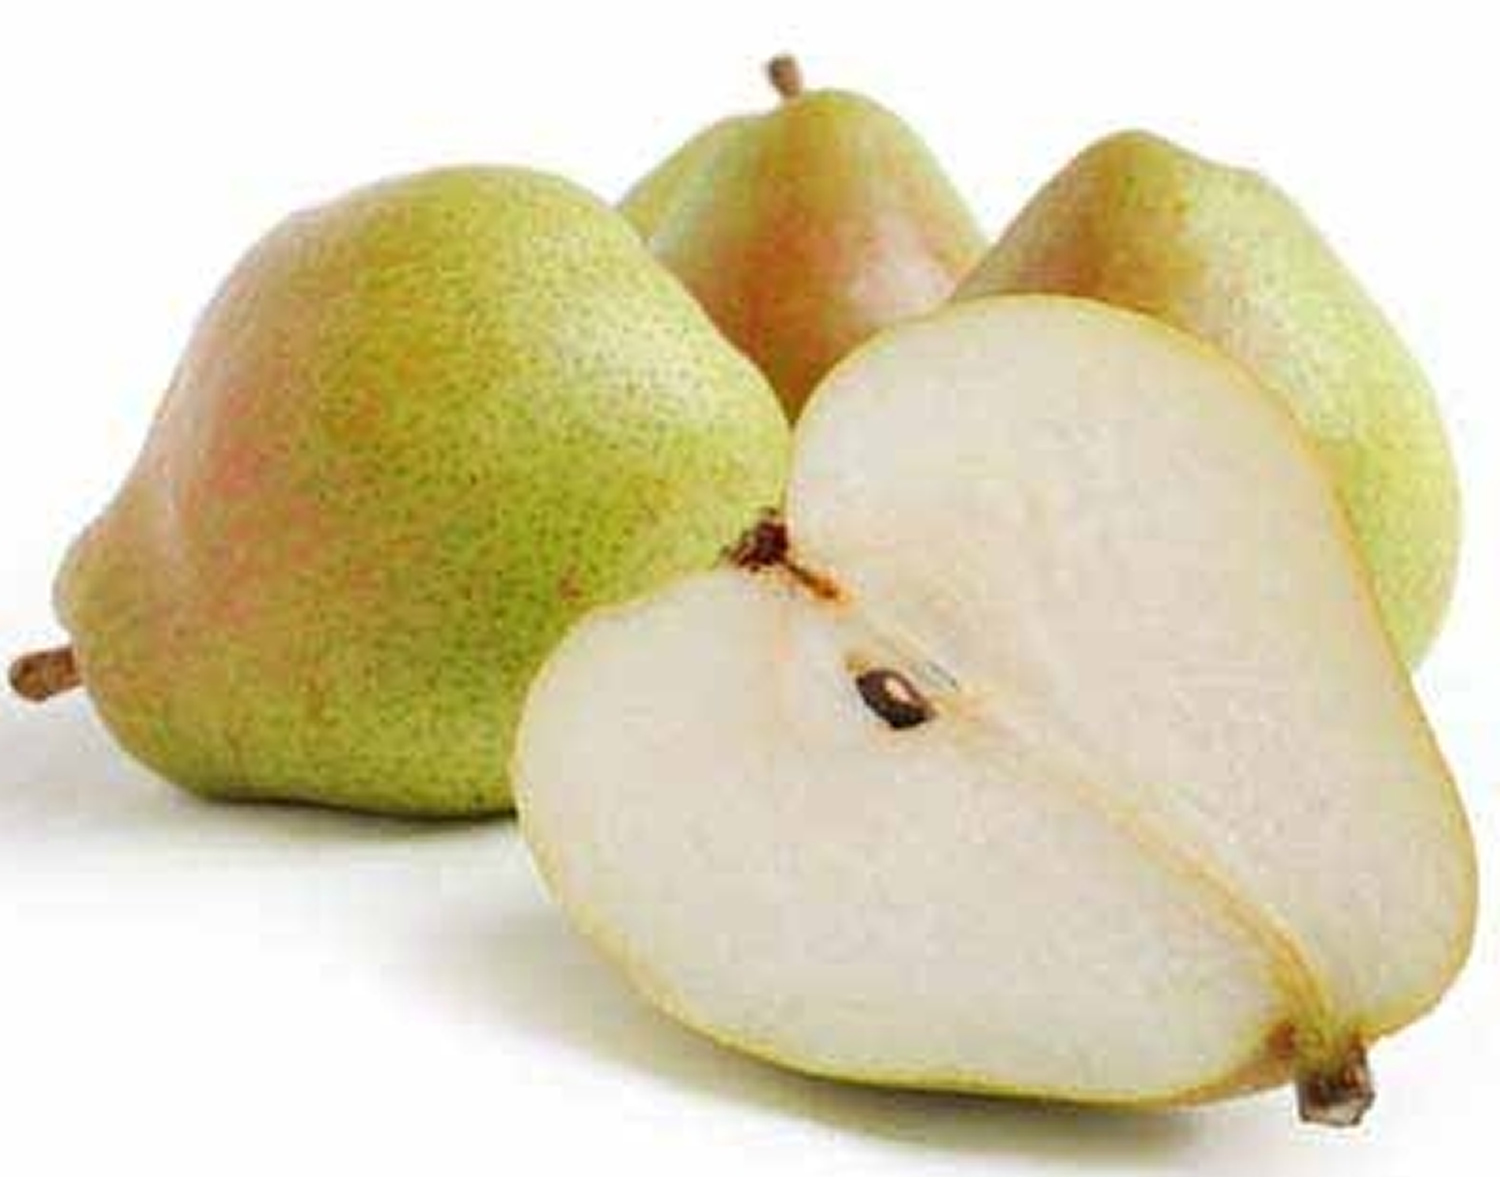 Comice pears